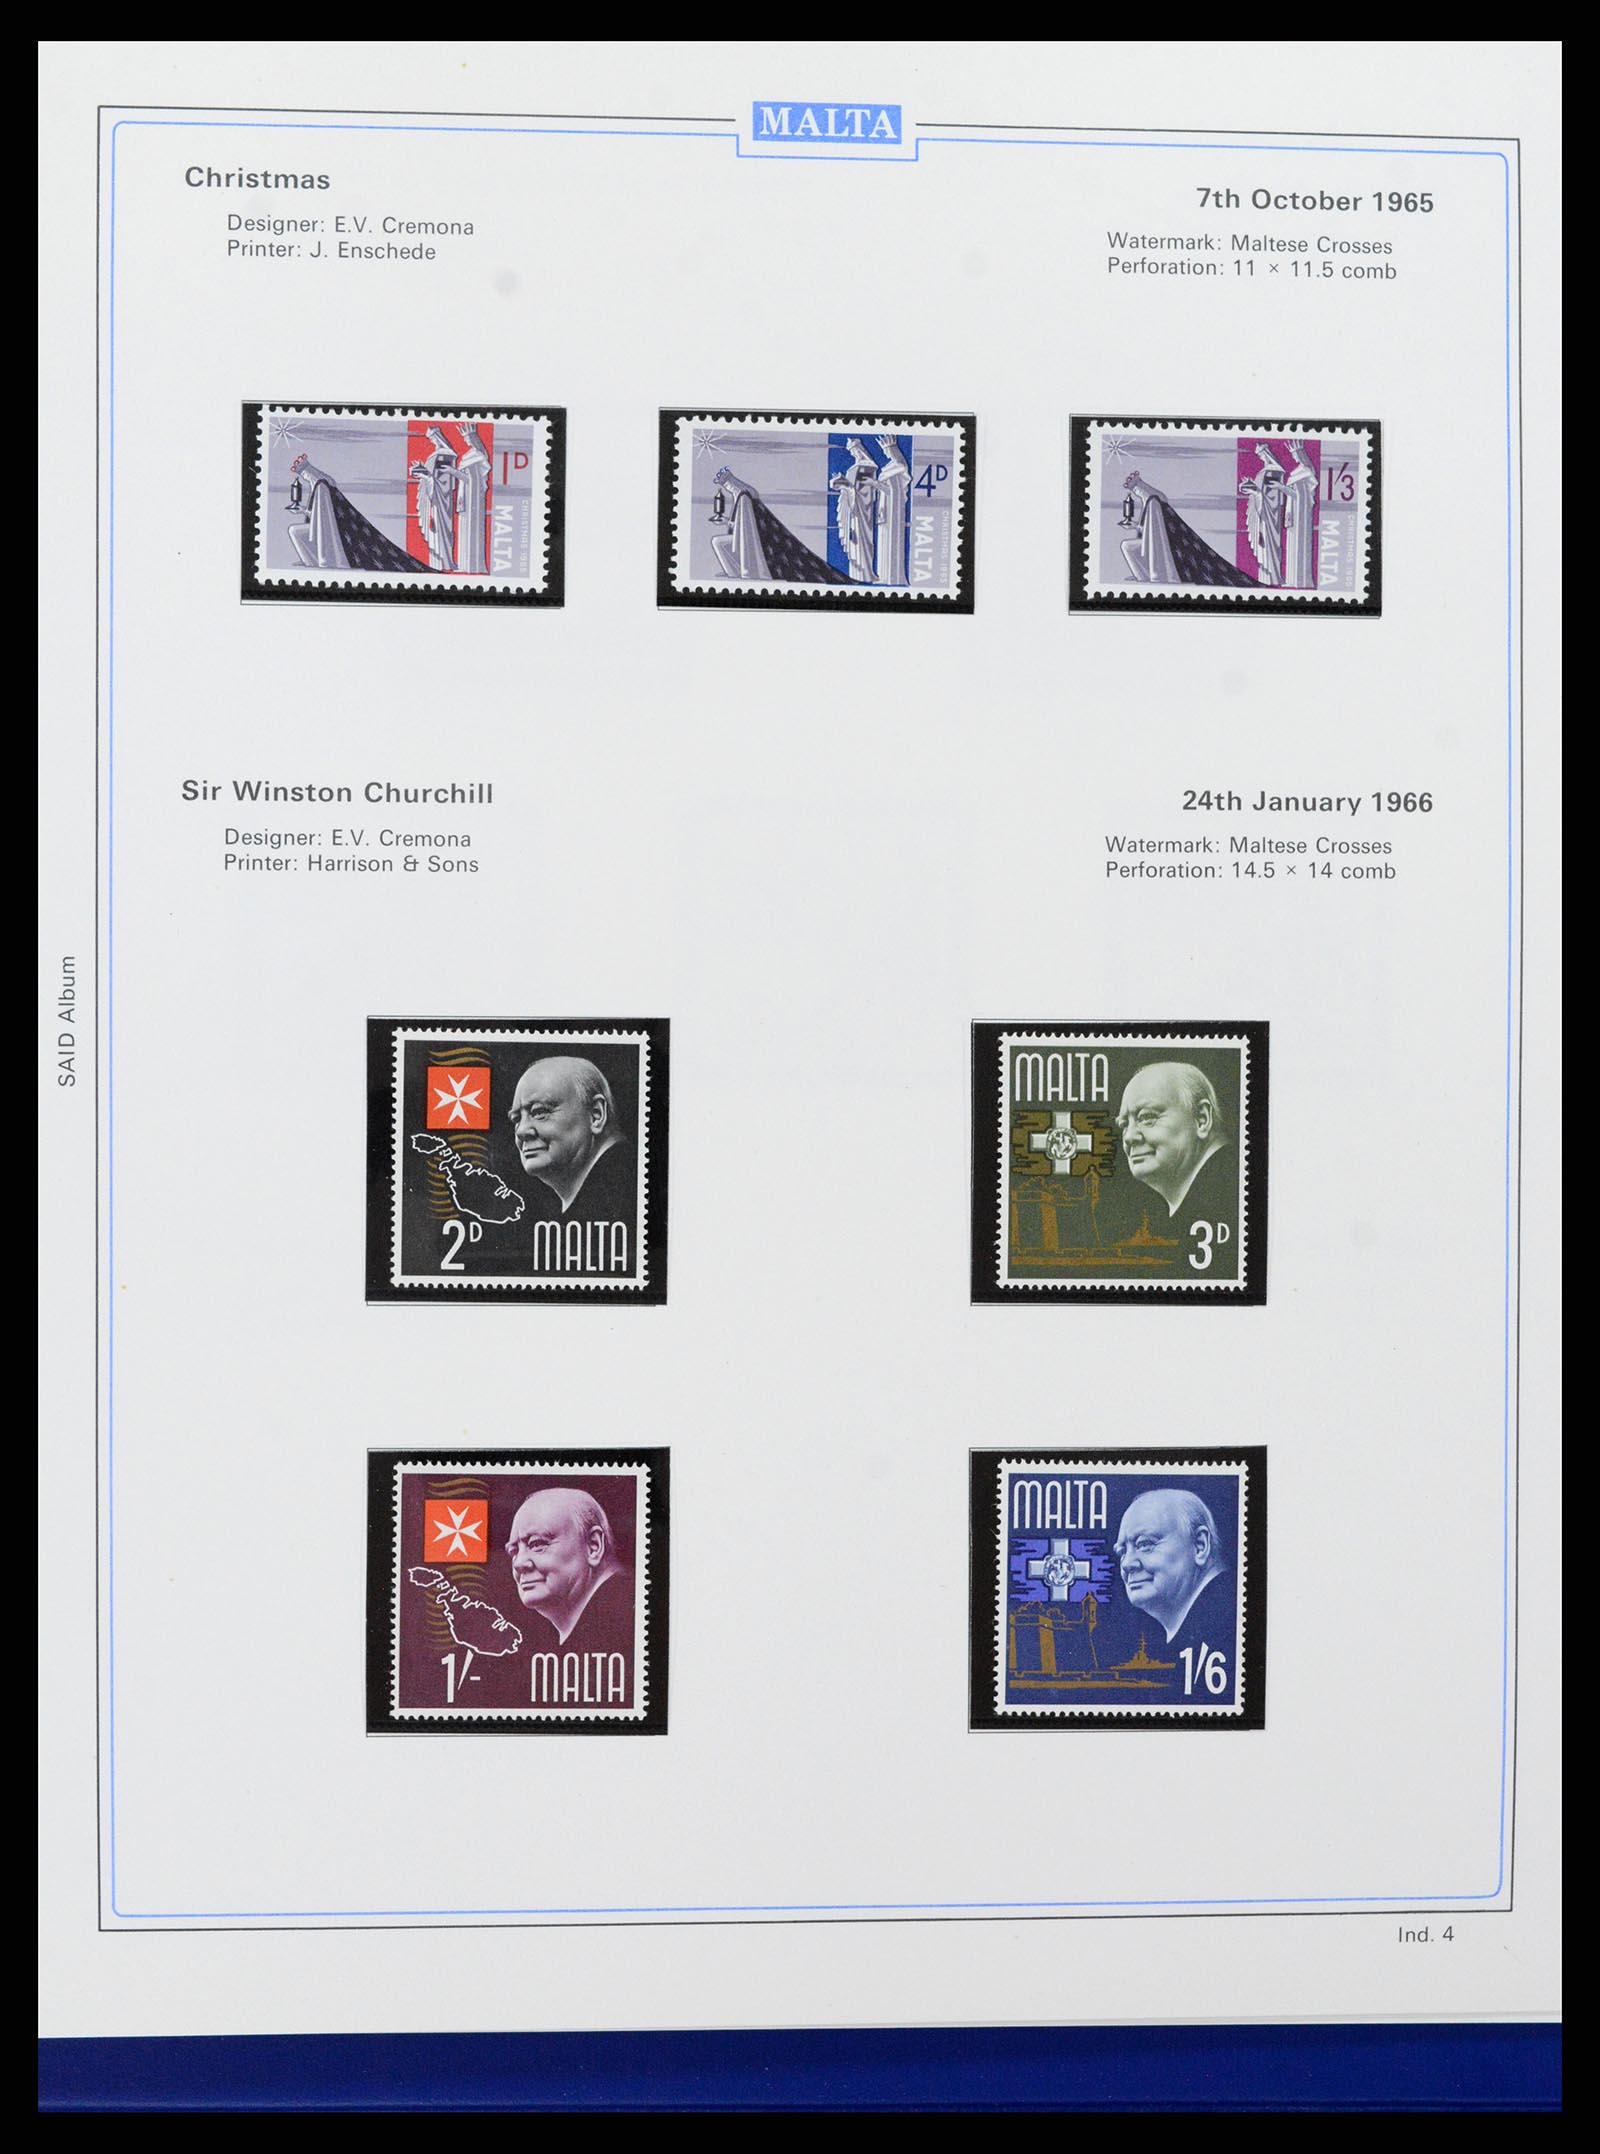 37374 032 - Stamp collection 37374 Malta 1885-2012.